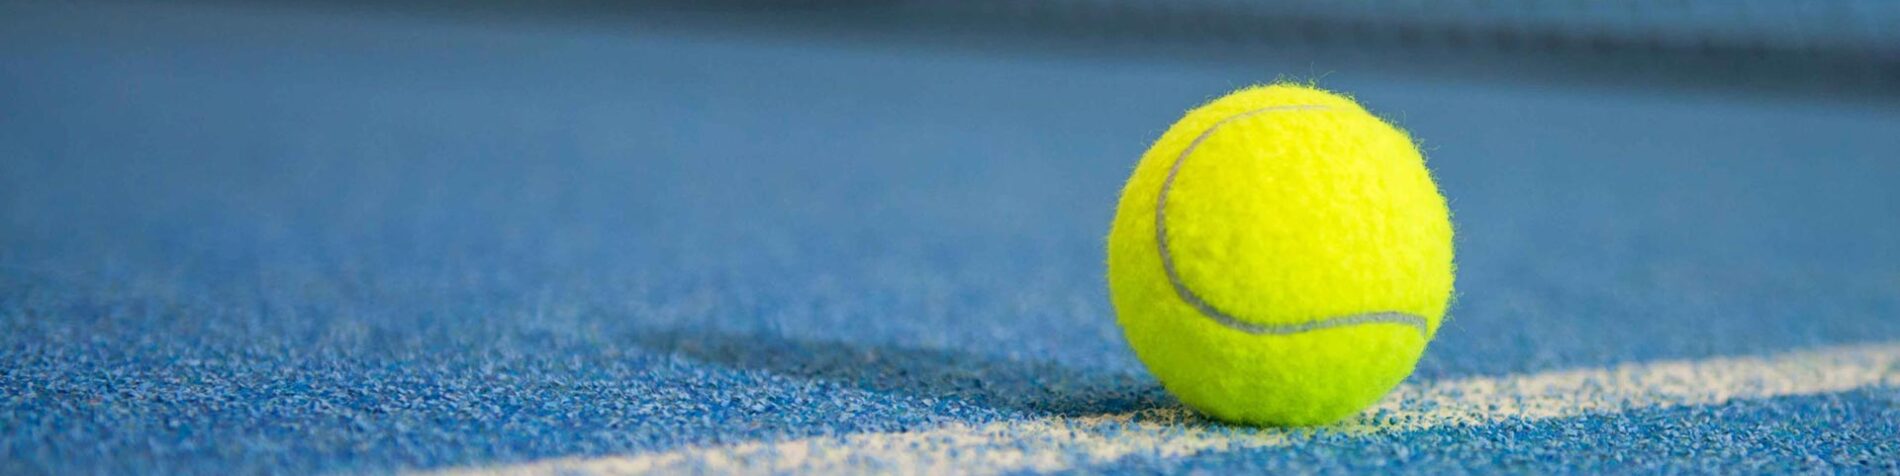 Corporate Sponsorships Reimagined: Women’s Tennis Association